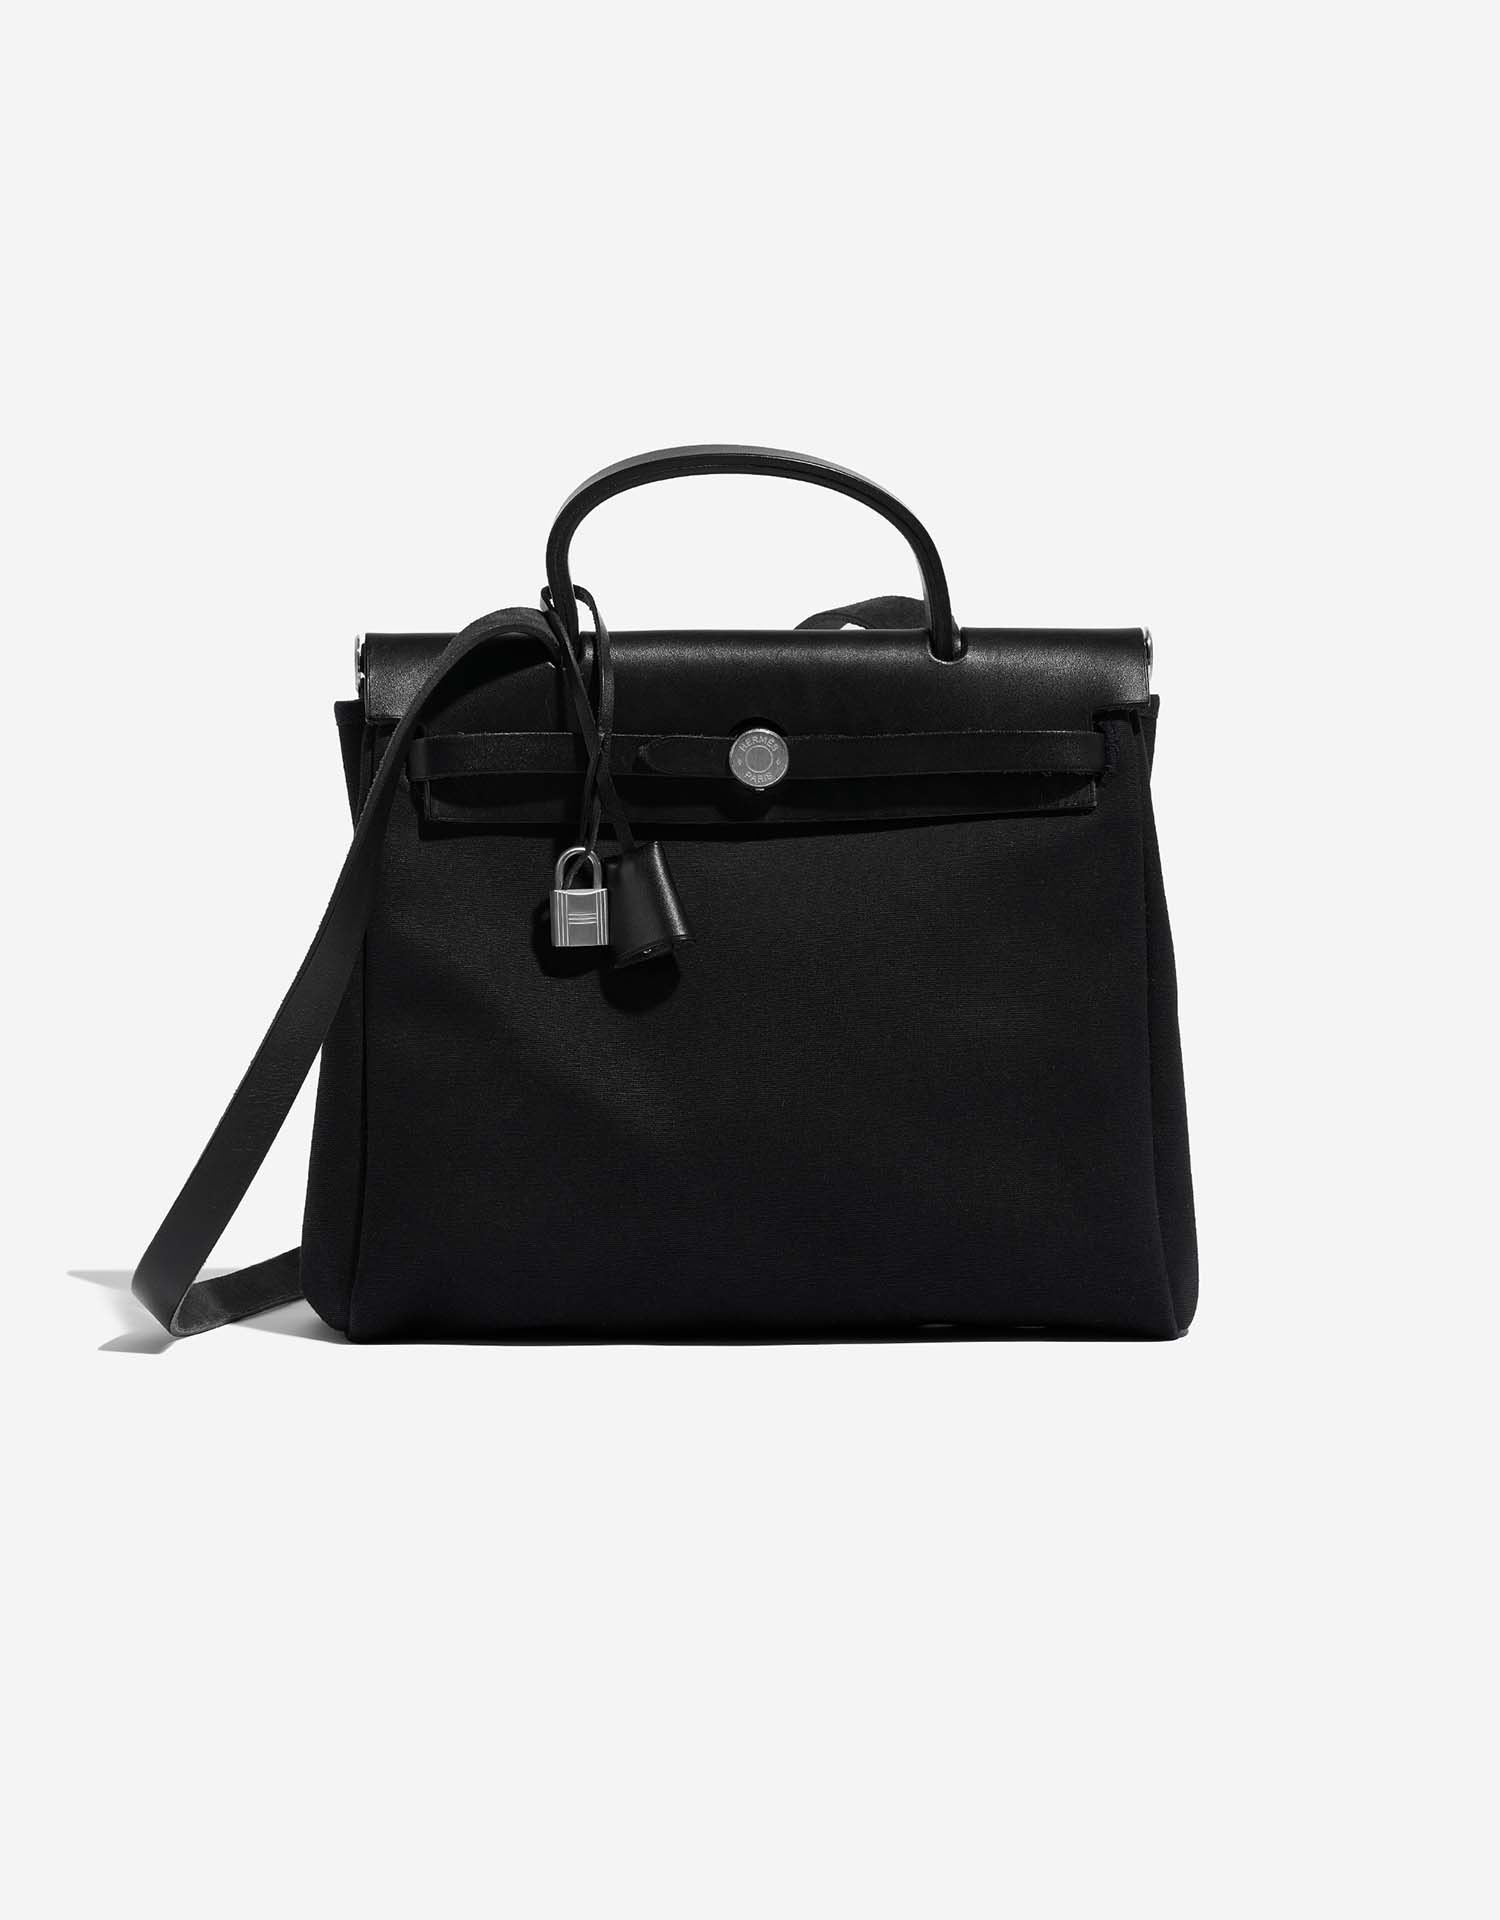 Top 5 Things to Consider When Valuing an Birkin Bag or Hermès Kelly Bag, Handbags & Accessories